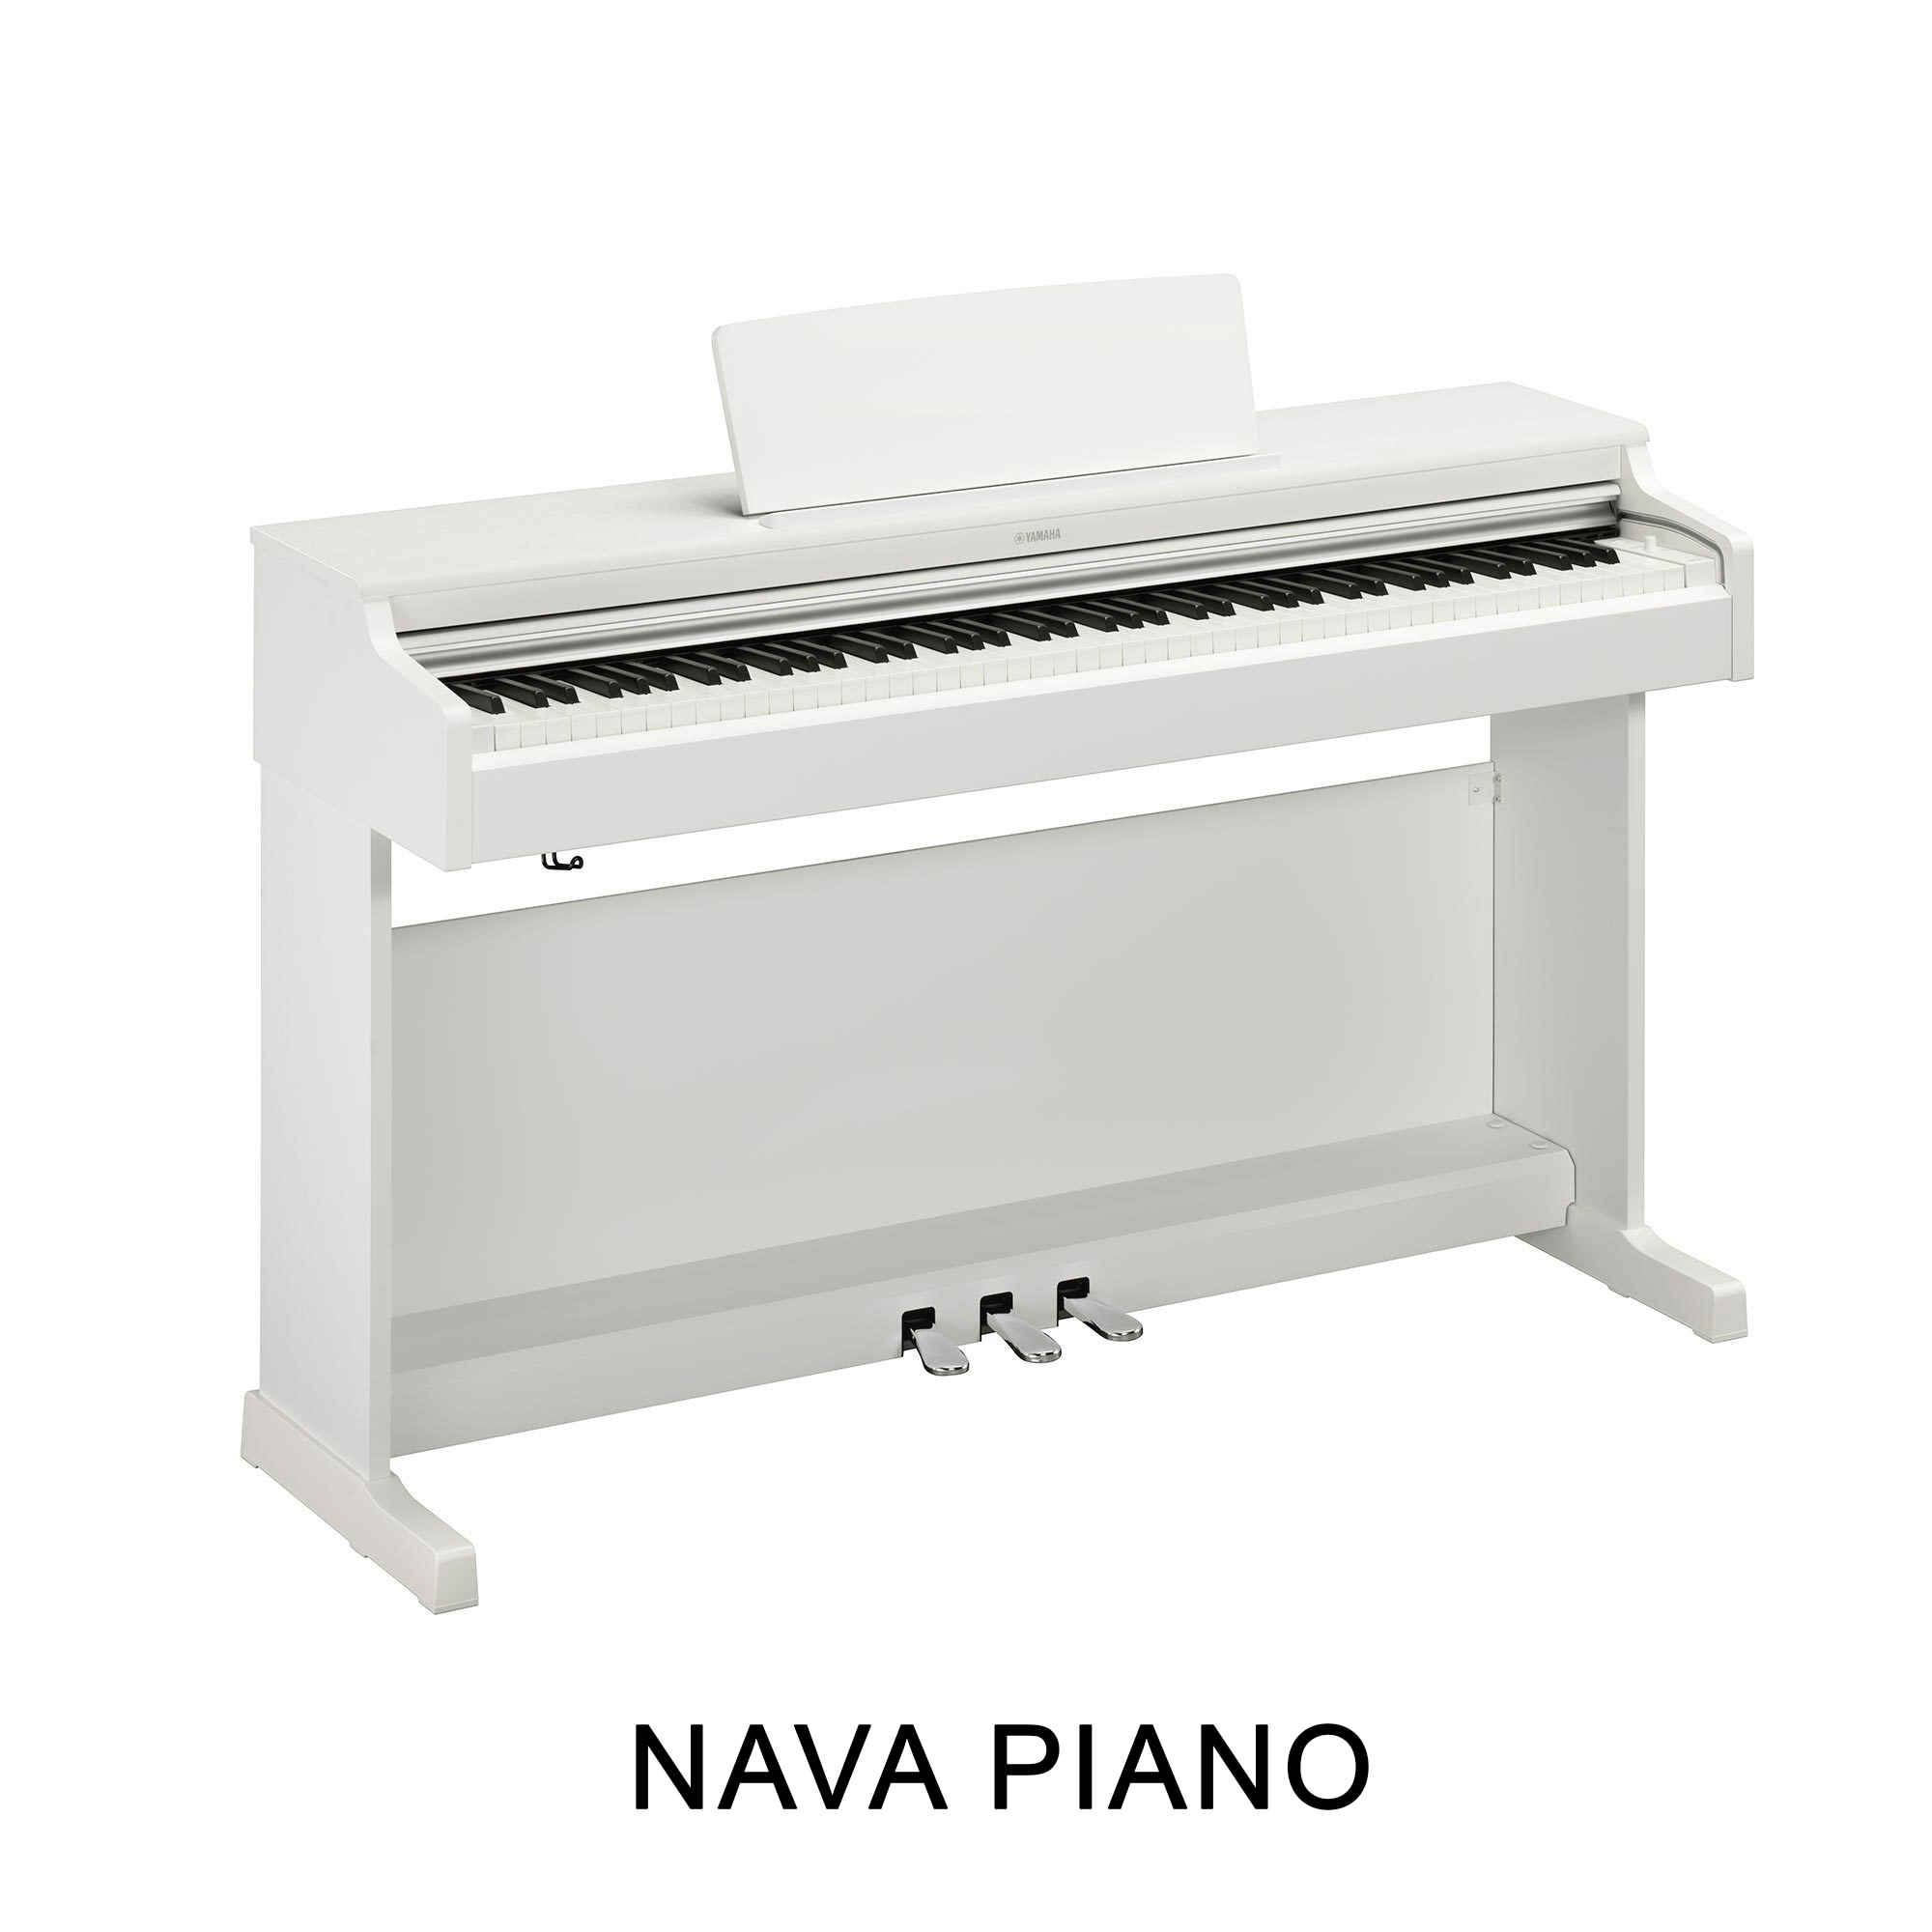 پیانو دیجیتال یاماها مدل YDP 165